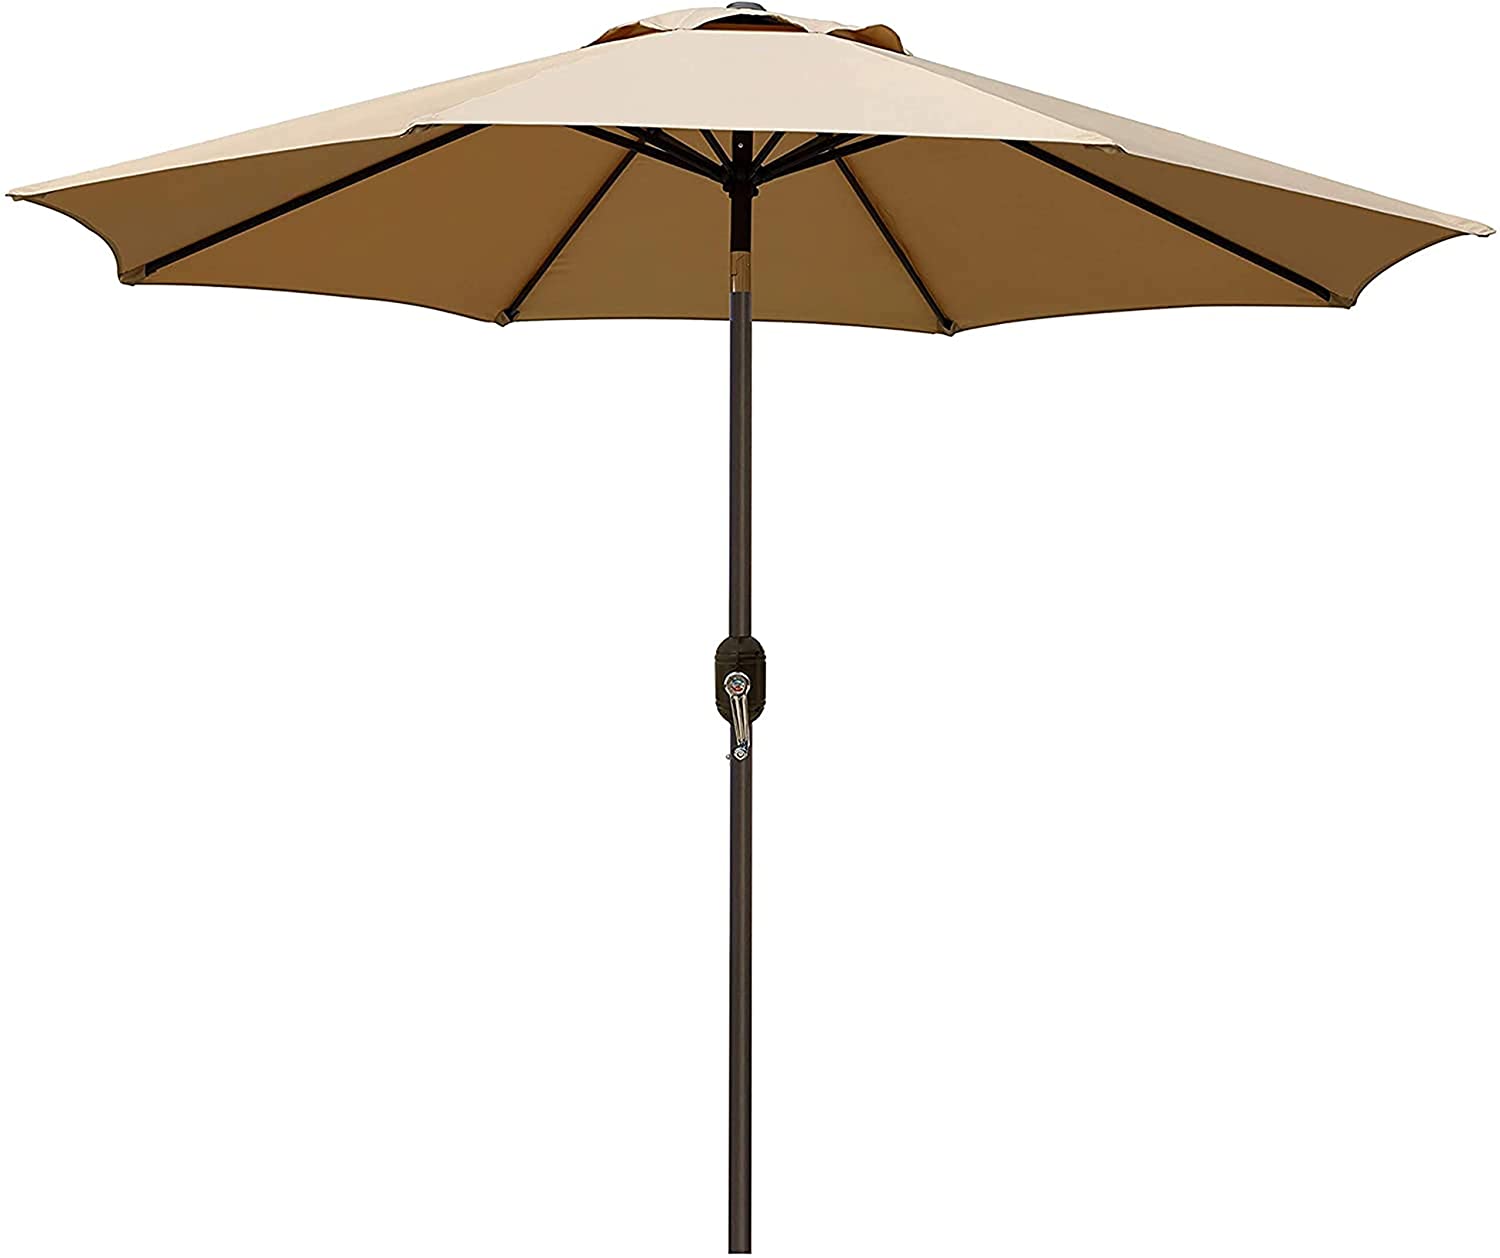 Blissun Rust-Free Powder Coated Pole Patio Umbrella, 9-Foot